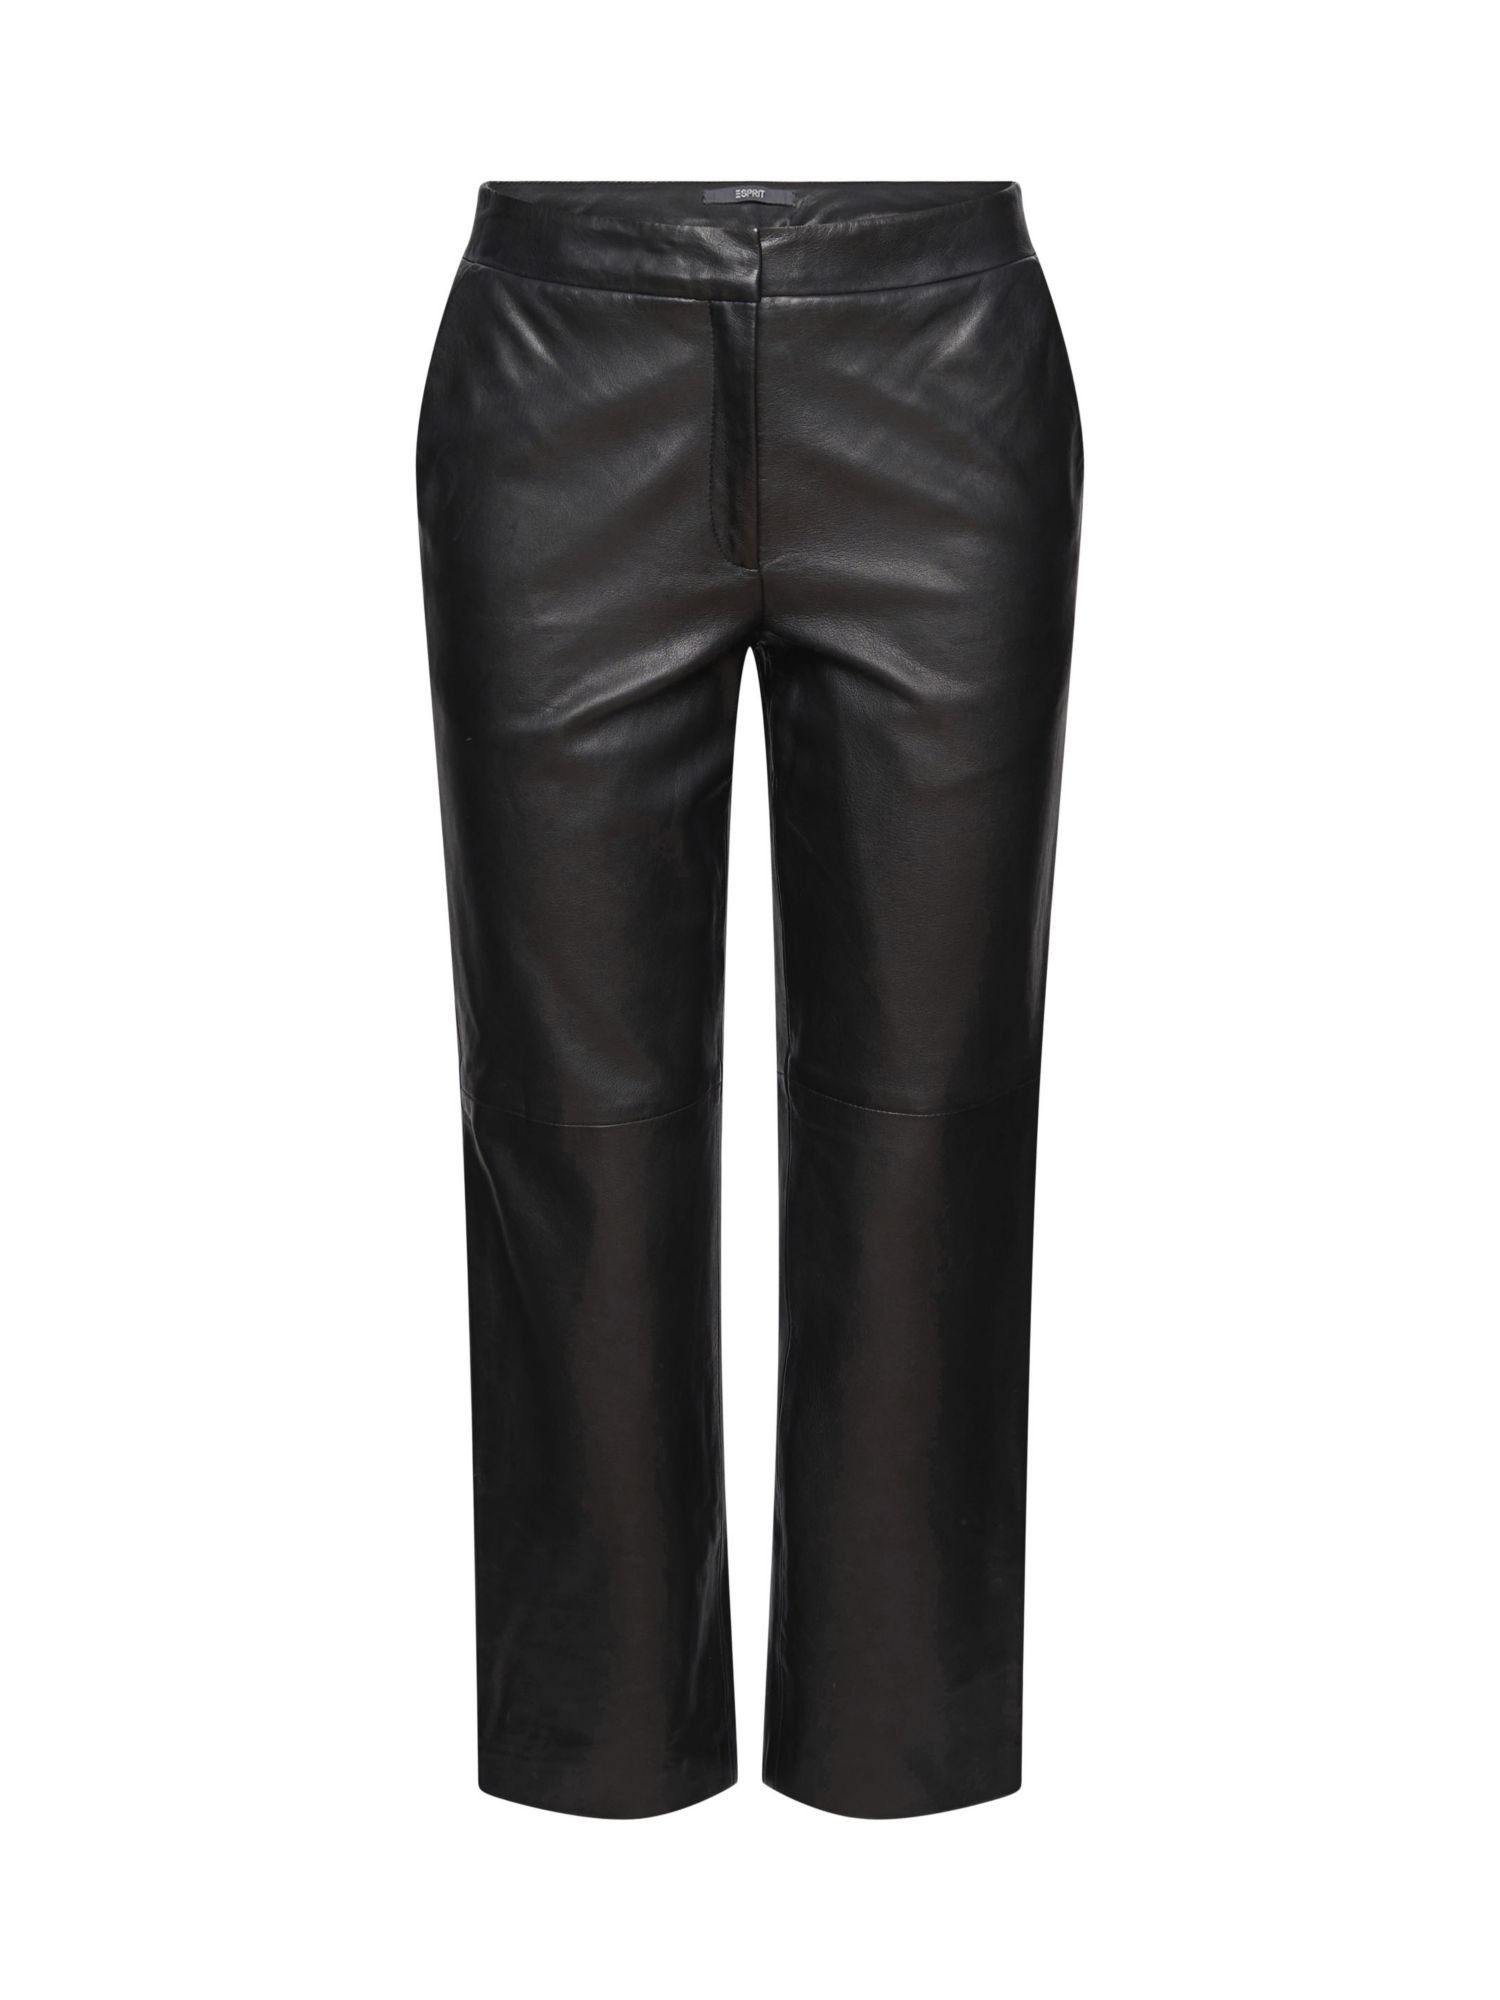 Esprit Collection Lederhose »Aus Leder: Cropped Hose« online kaufen | OTTO